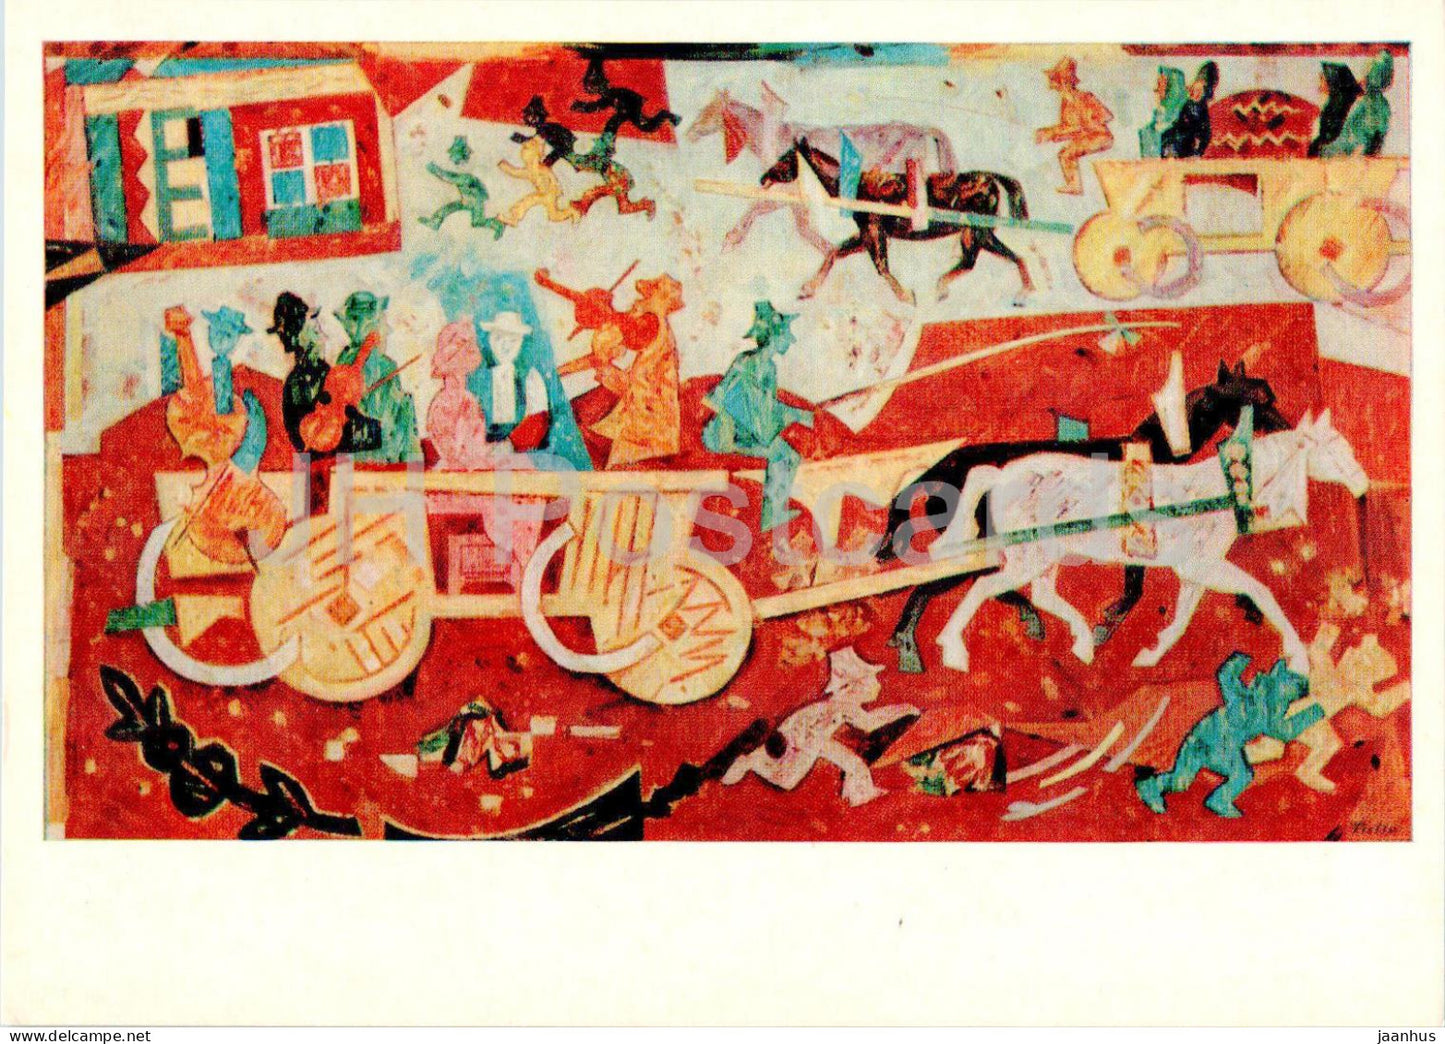 painting by Ludovit Fulla - Peasant Wedding - Czech art - 1977 - Russia USSR - unused - JH Postcards